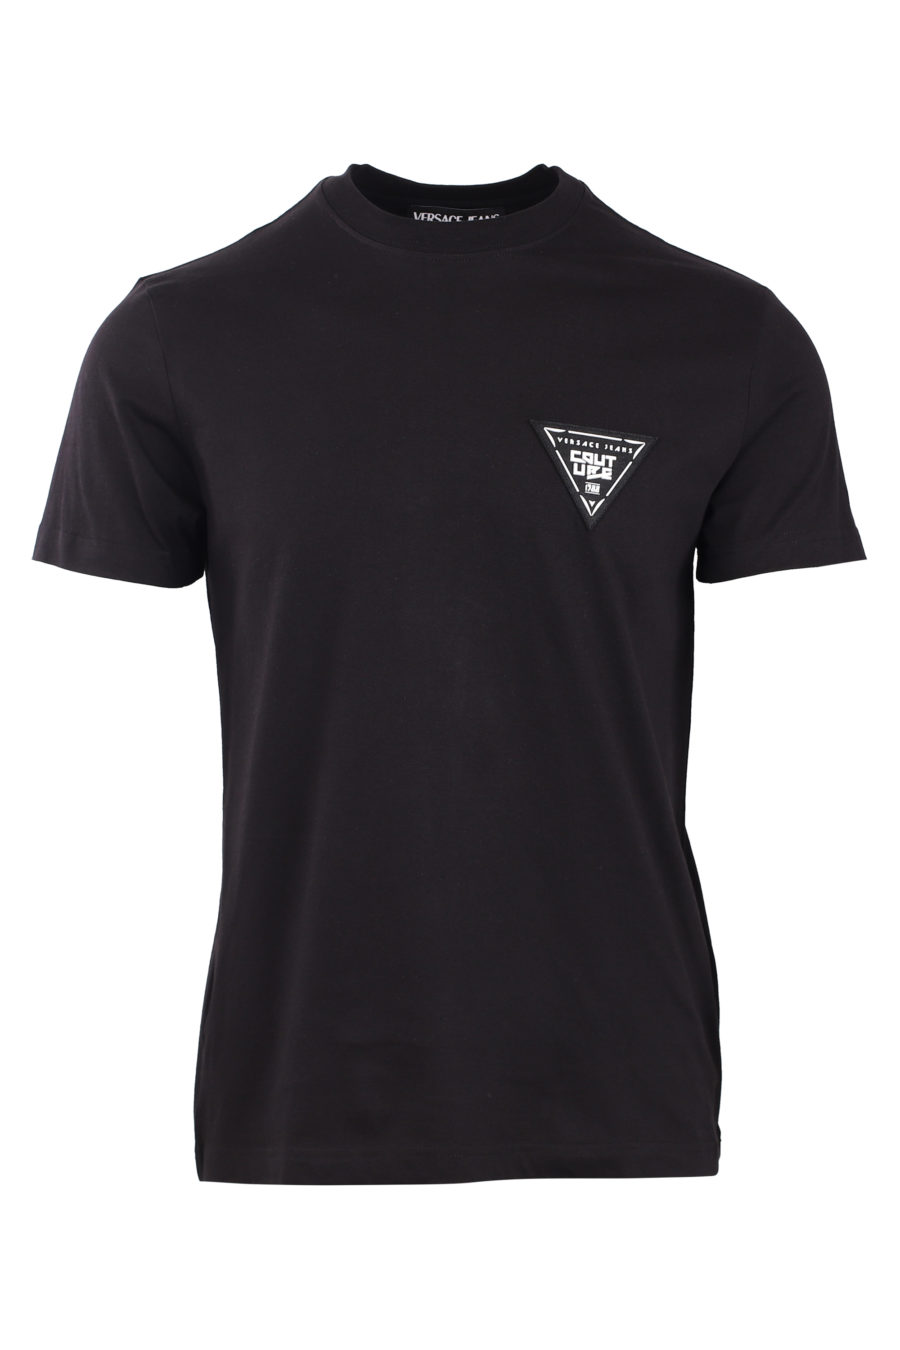 Camiseta negra con logo en triangulo pequeño - IMG 0786